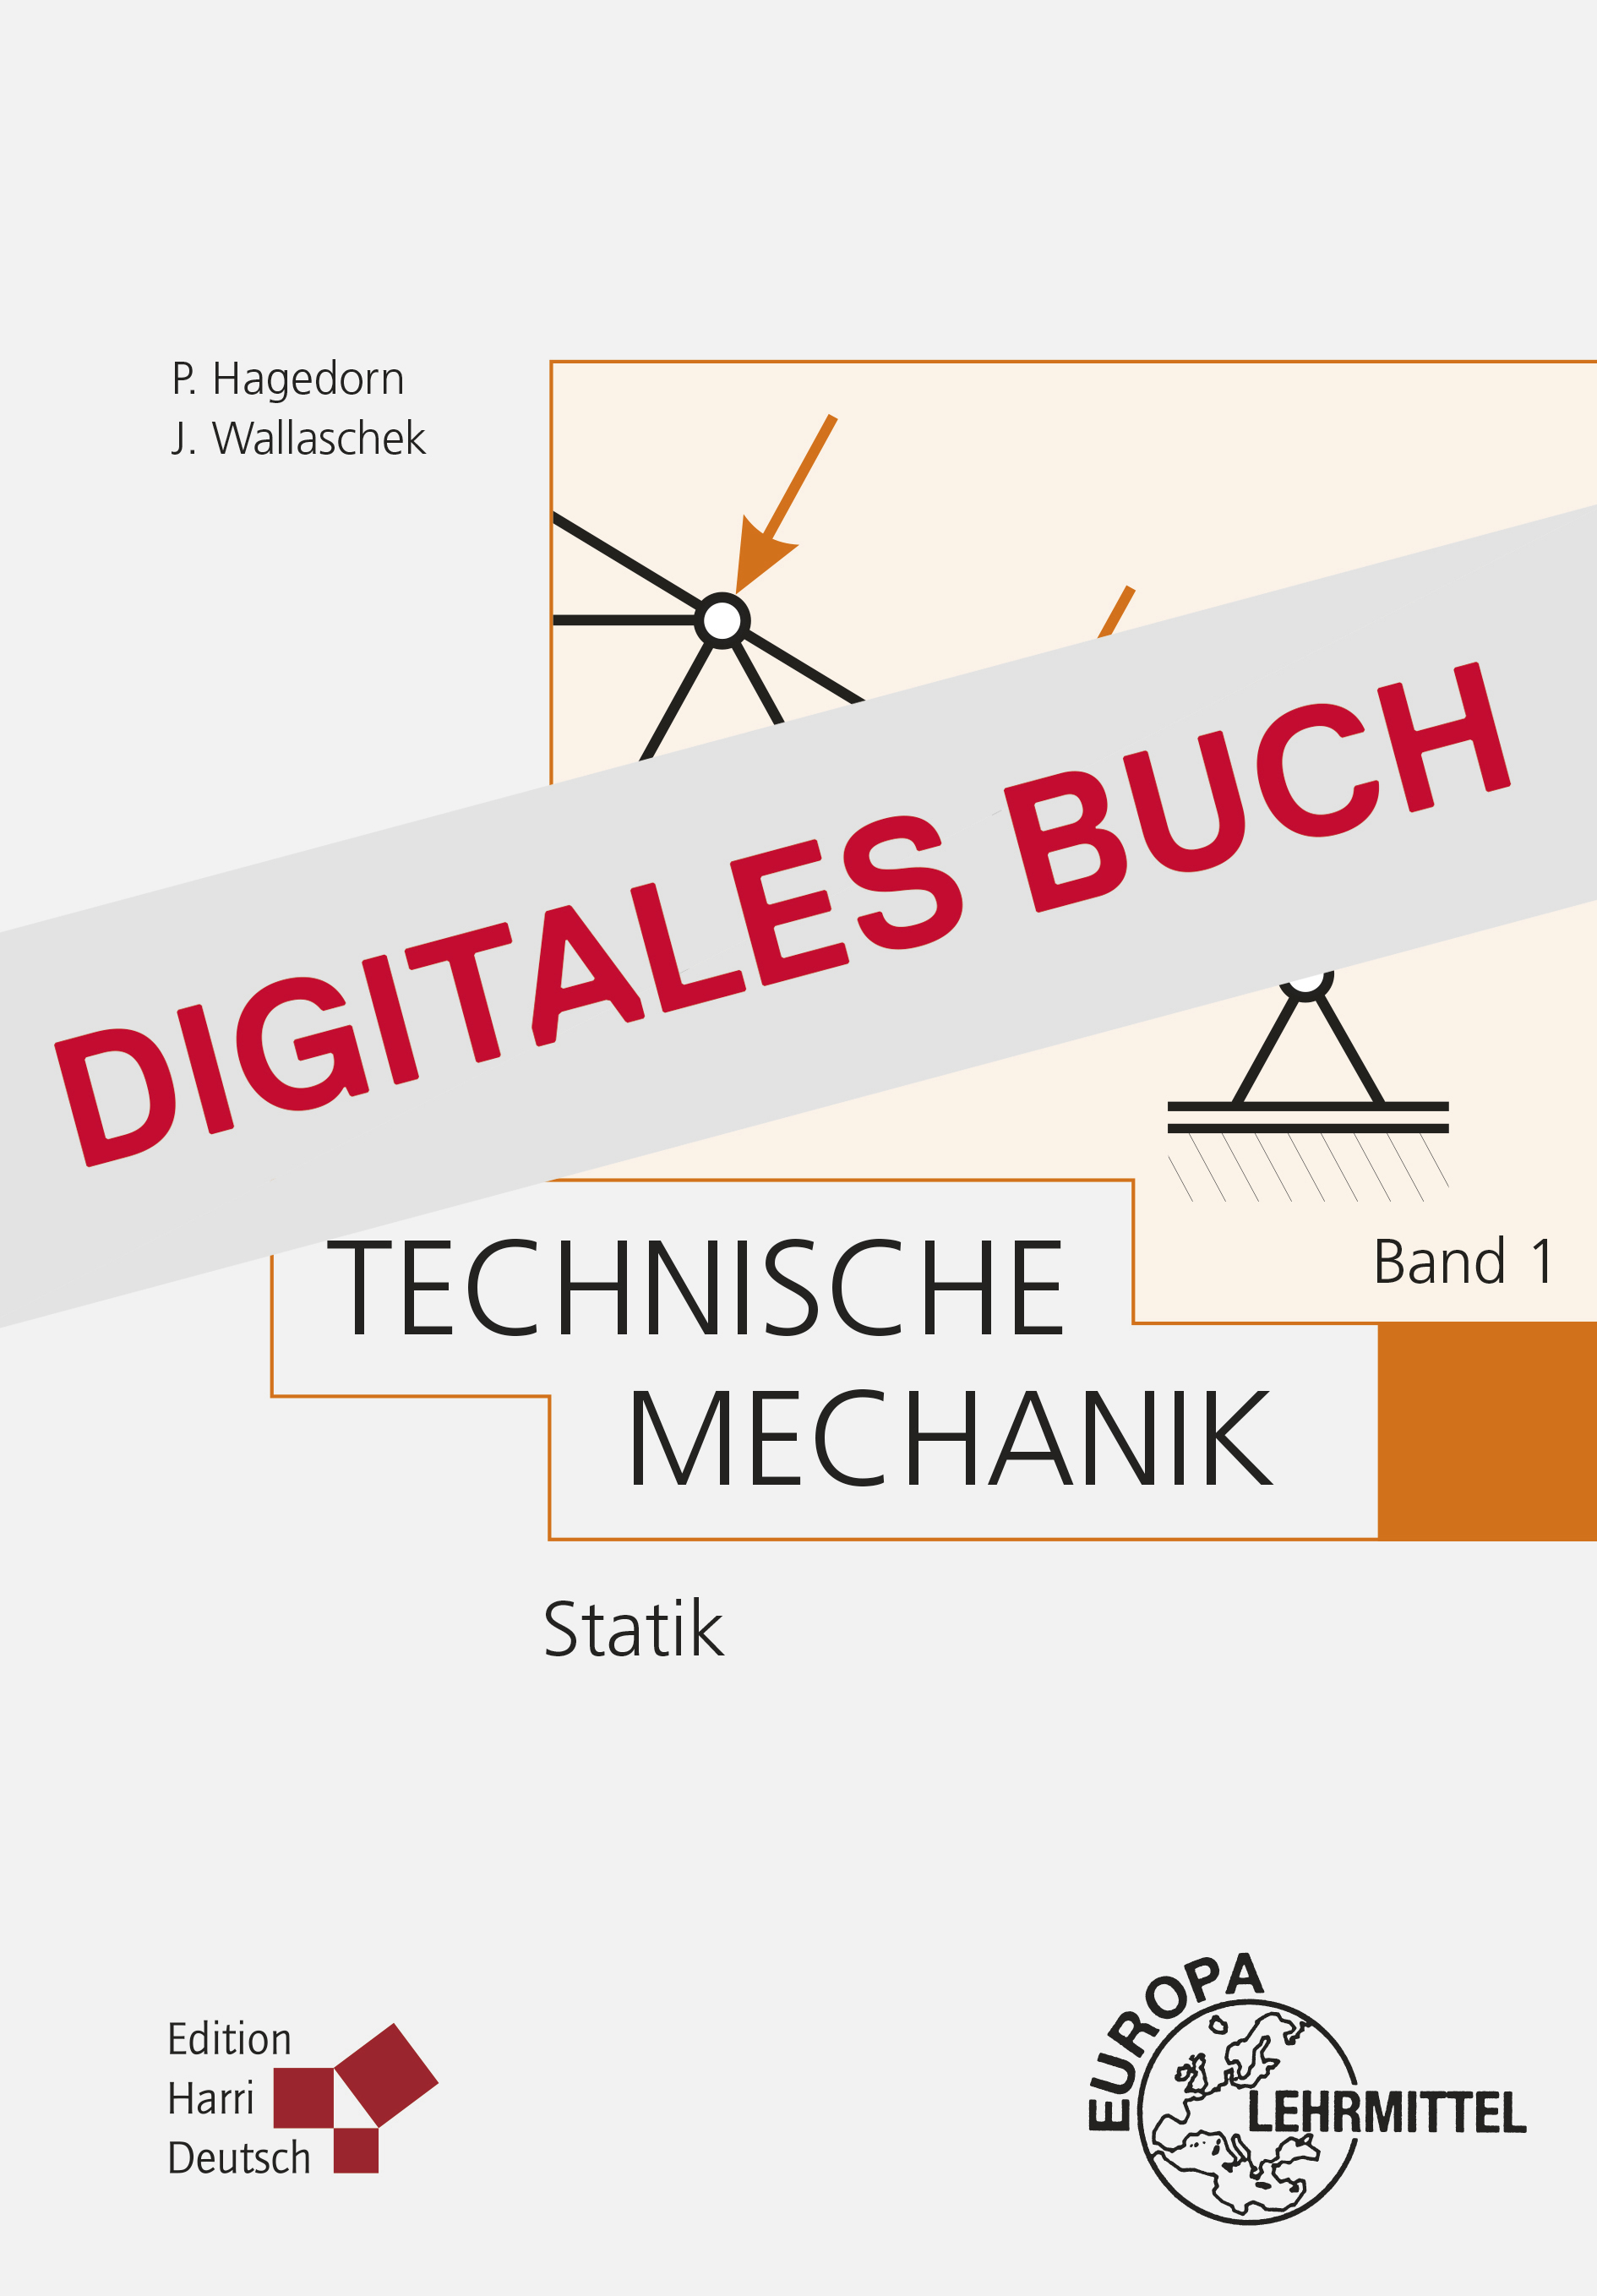 Technische Mechanik Band 1: Statik - Digitales Buch